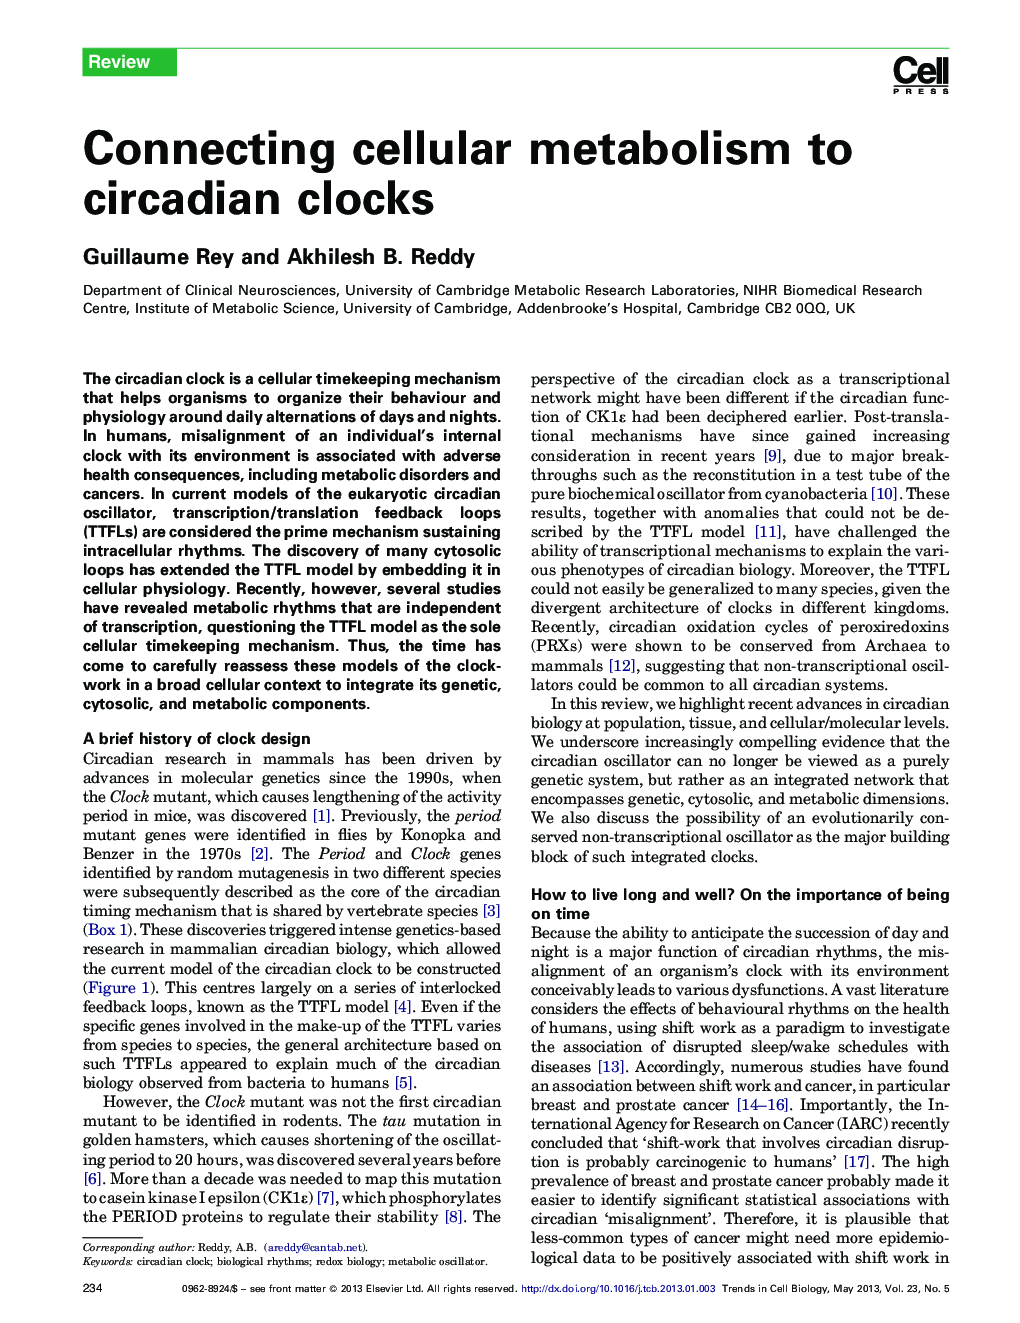 Connecting cellular metabolism to circadian clocks